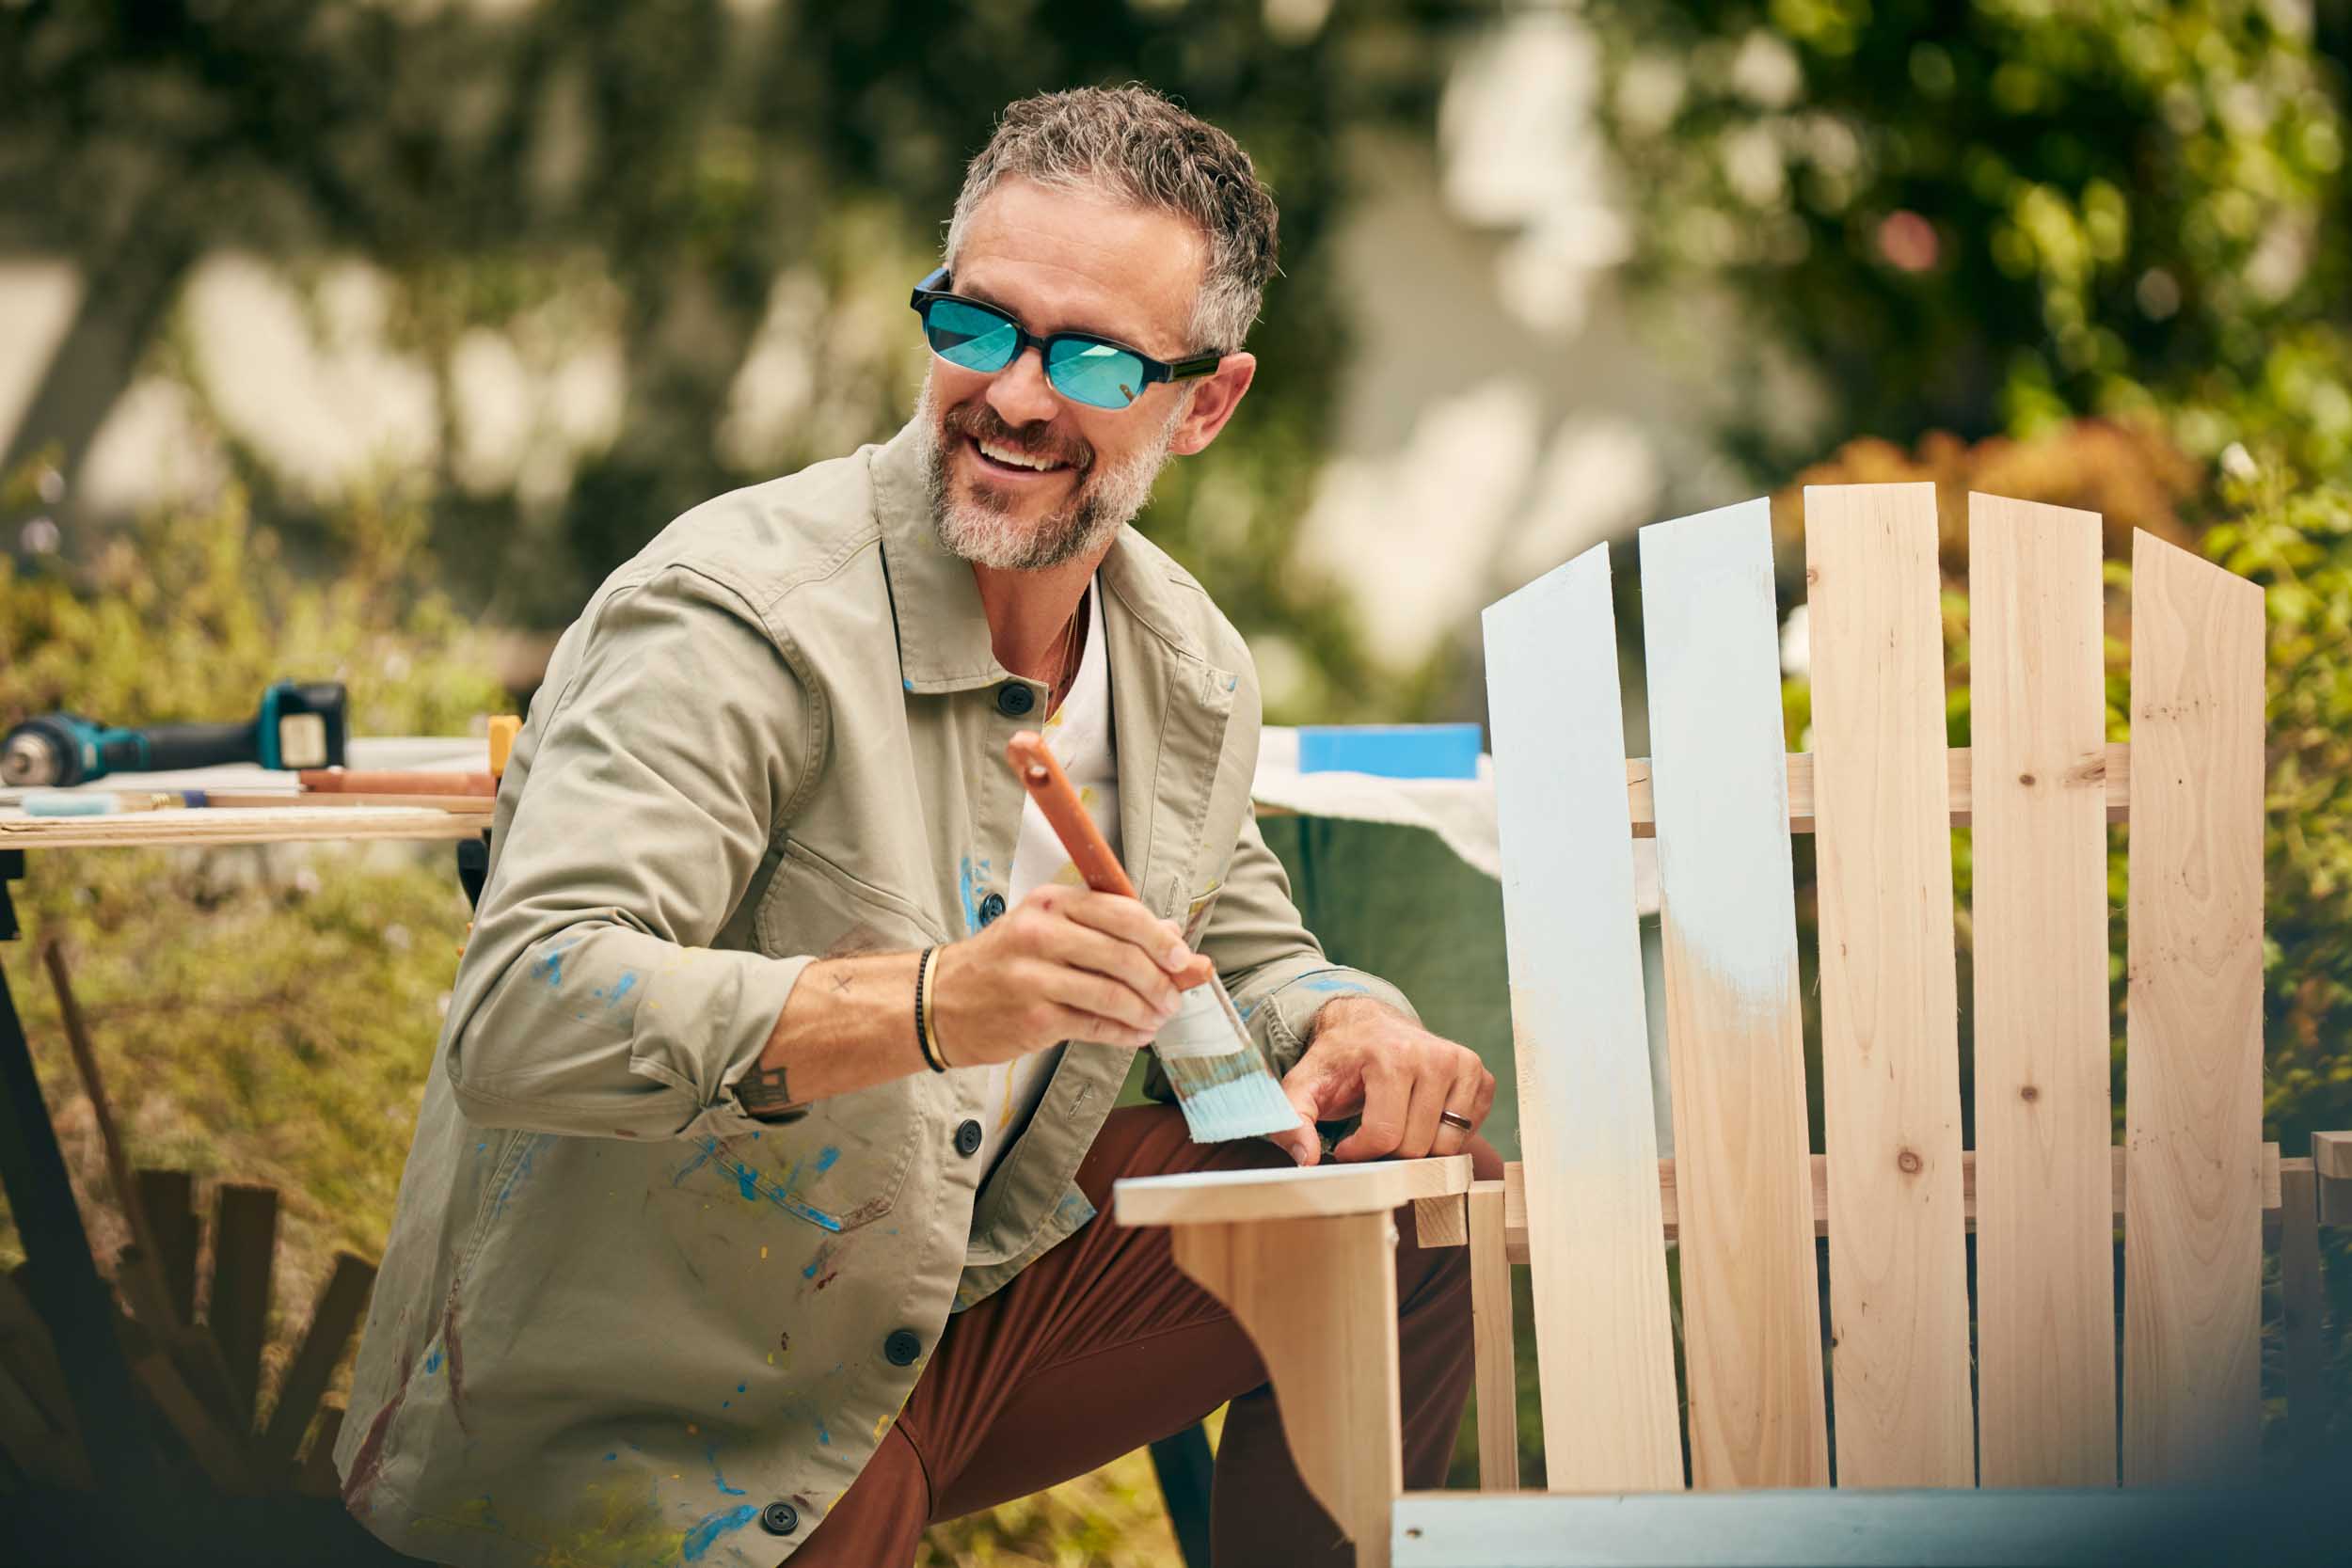 Painting An Adiorondack Chair, Wearing Smartglasses